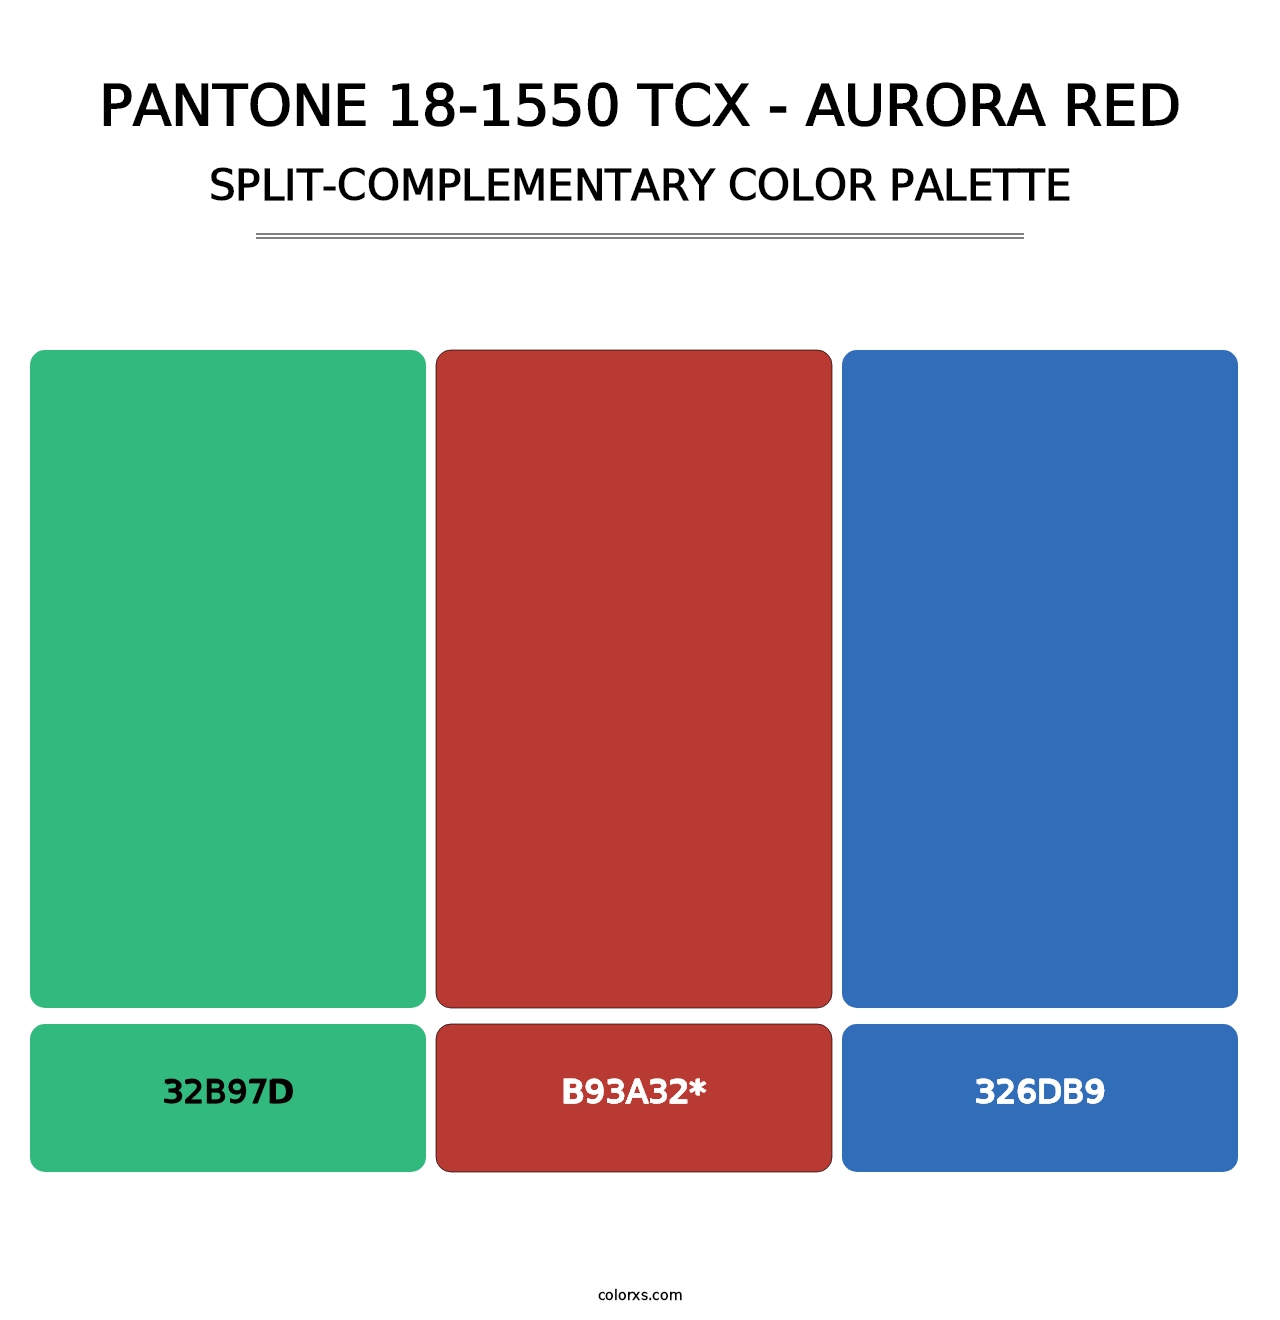 PANTONE 18-1550 TCX - Aurora Red - Split-Complementary Color Palette